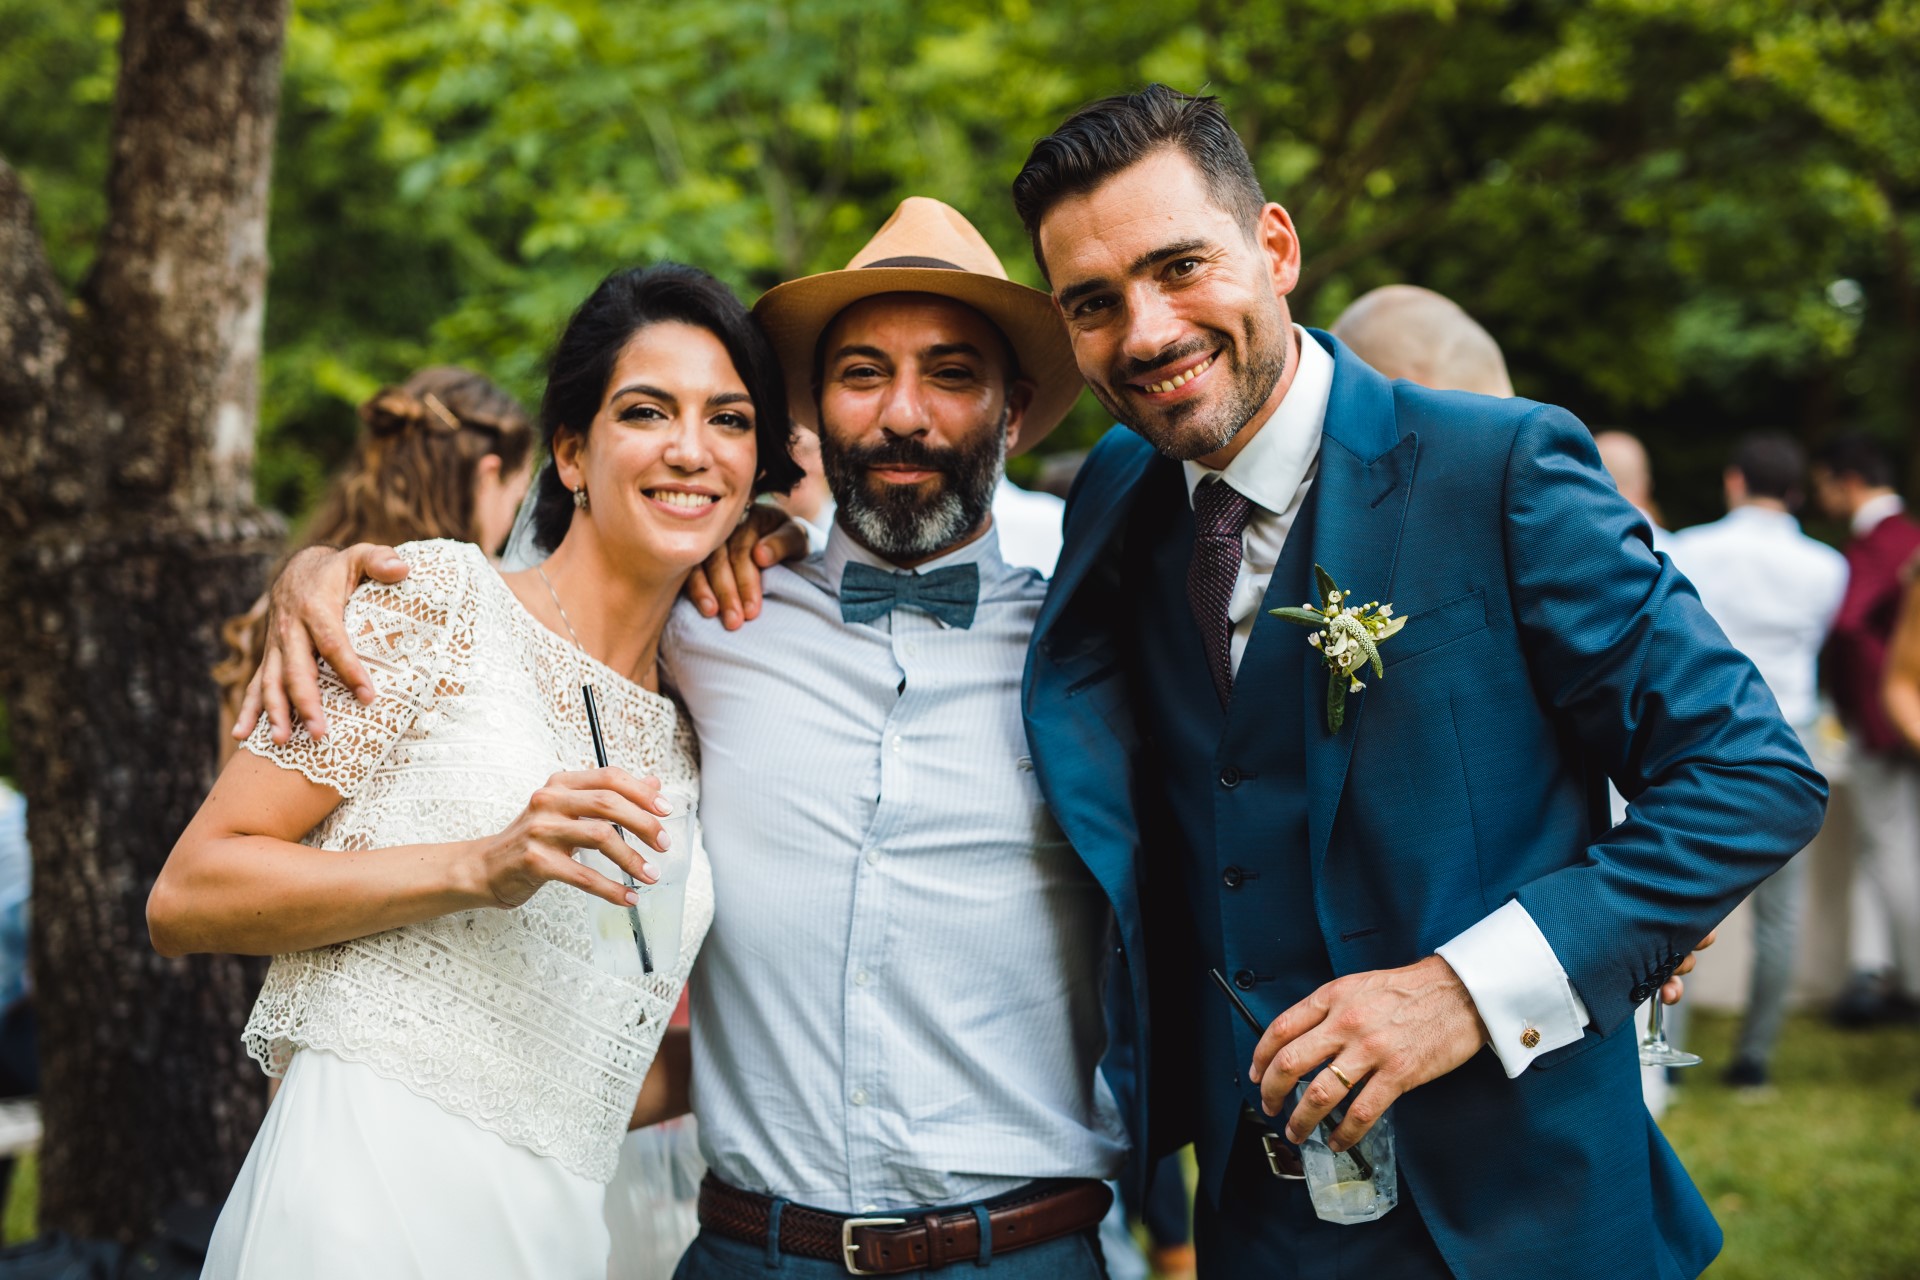 Arianna&Miguel Italian wedding matrimonio destination wedding photographer videographer luxury reportage italia italy